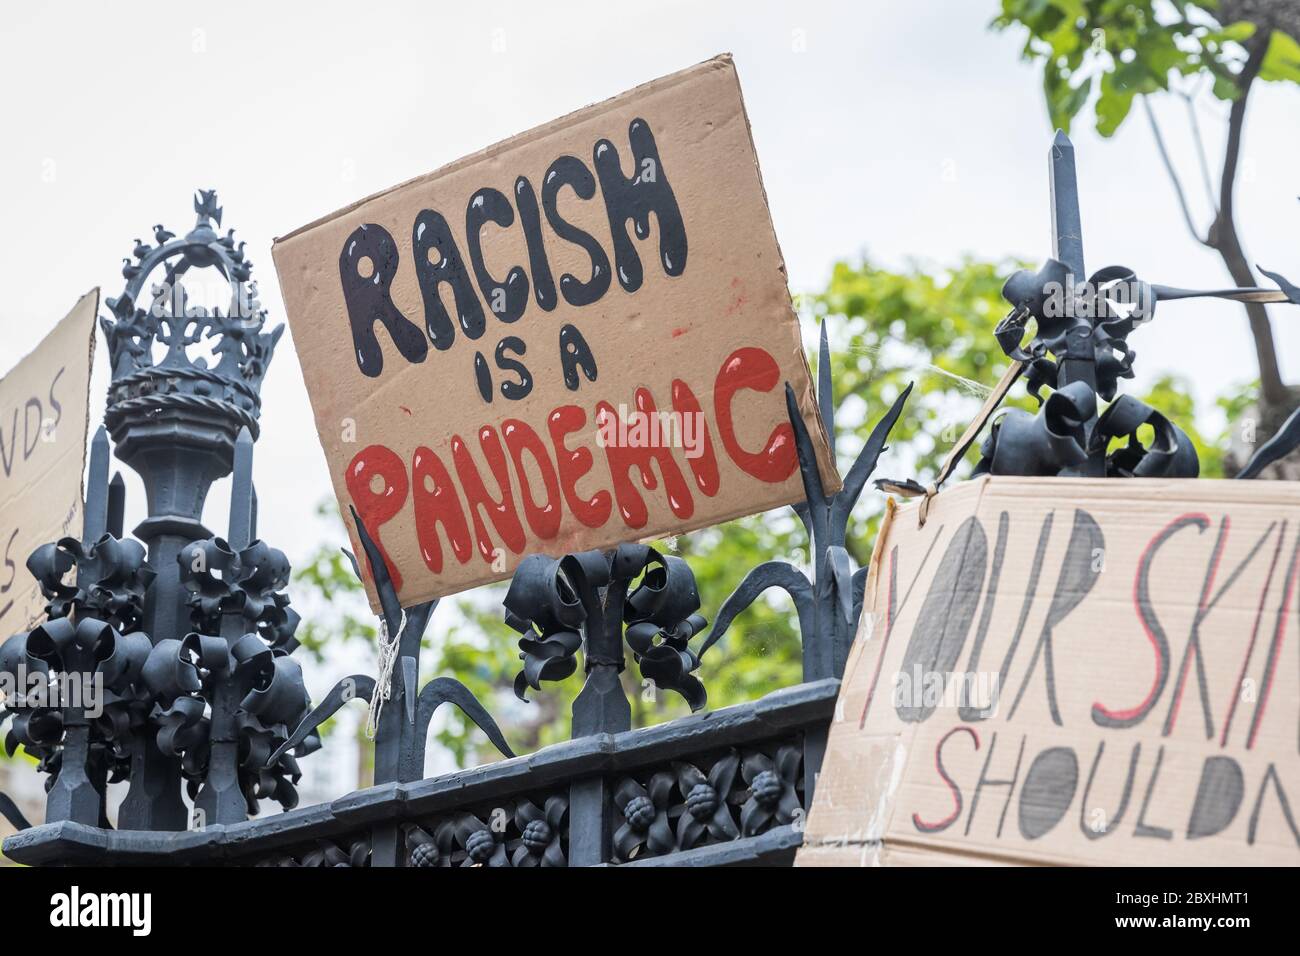 #blacklivesmatter protest in central London on Sunday 07 June 2020 Stock Photo